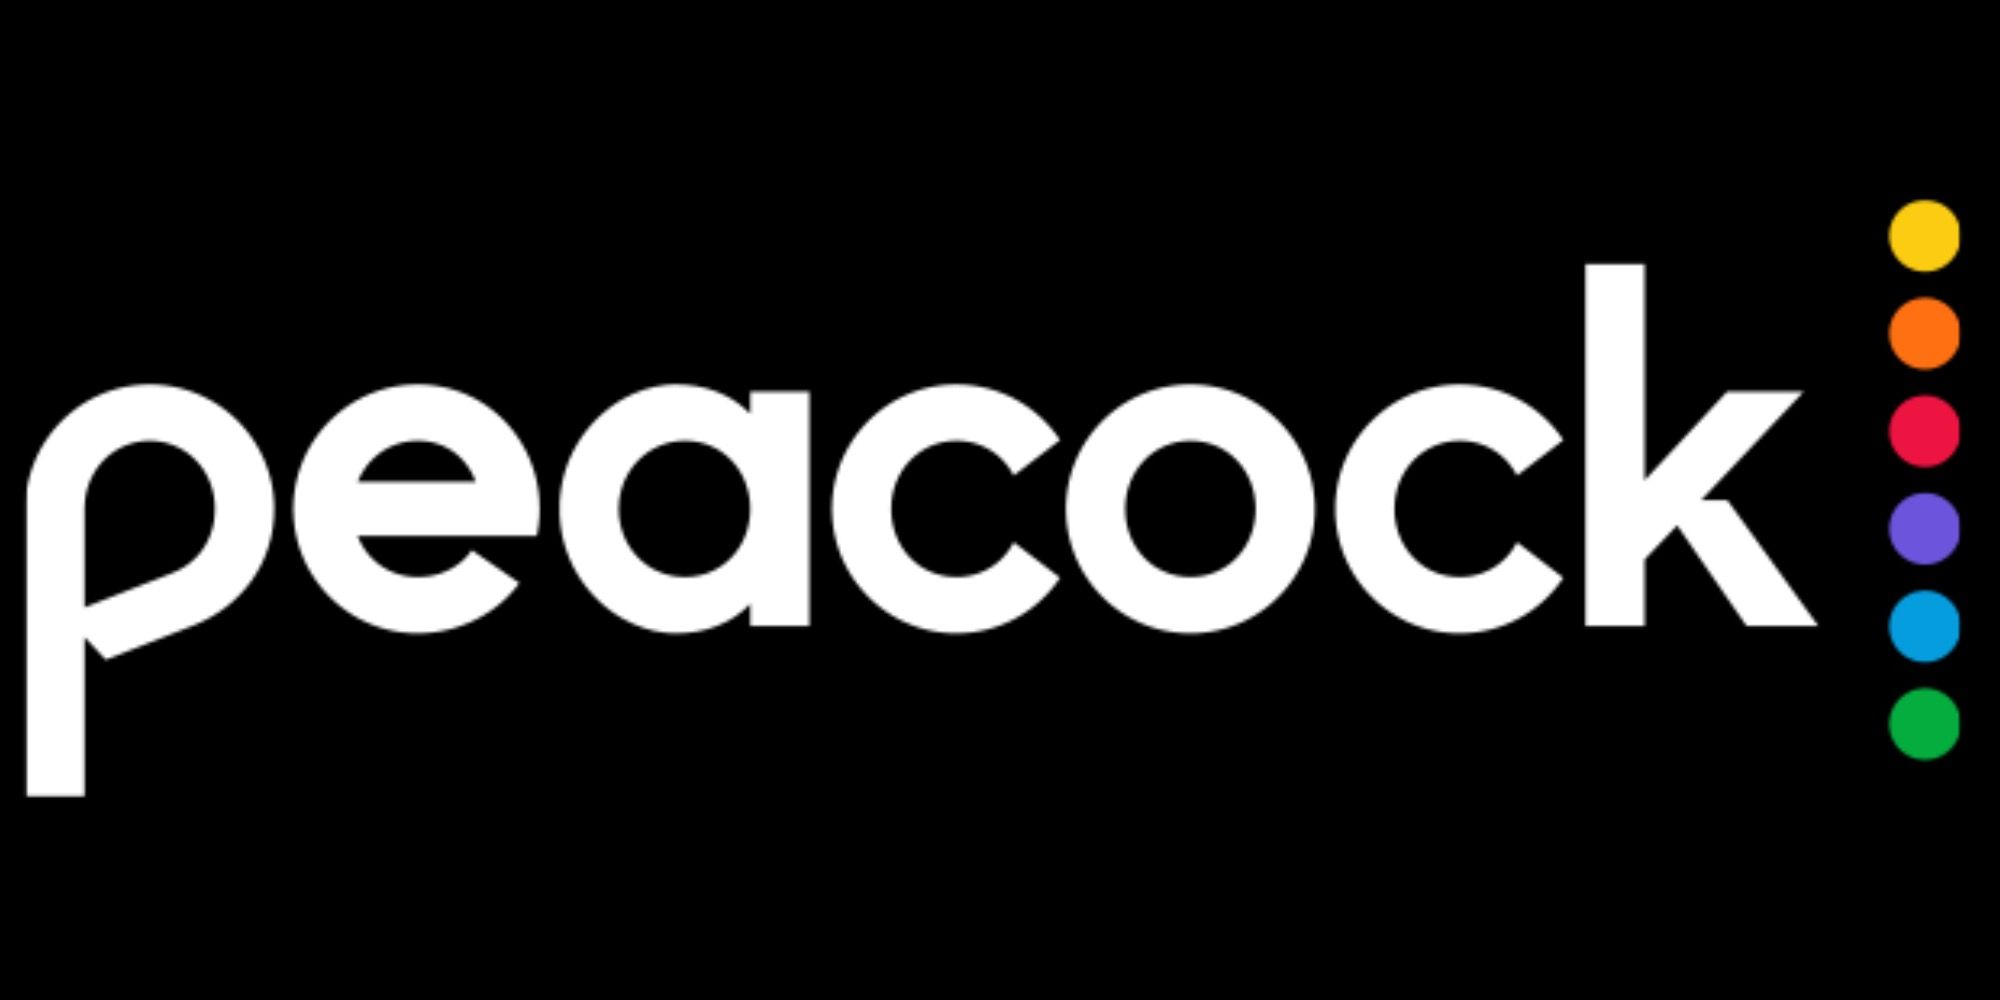 Image of Peacock logo